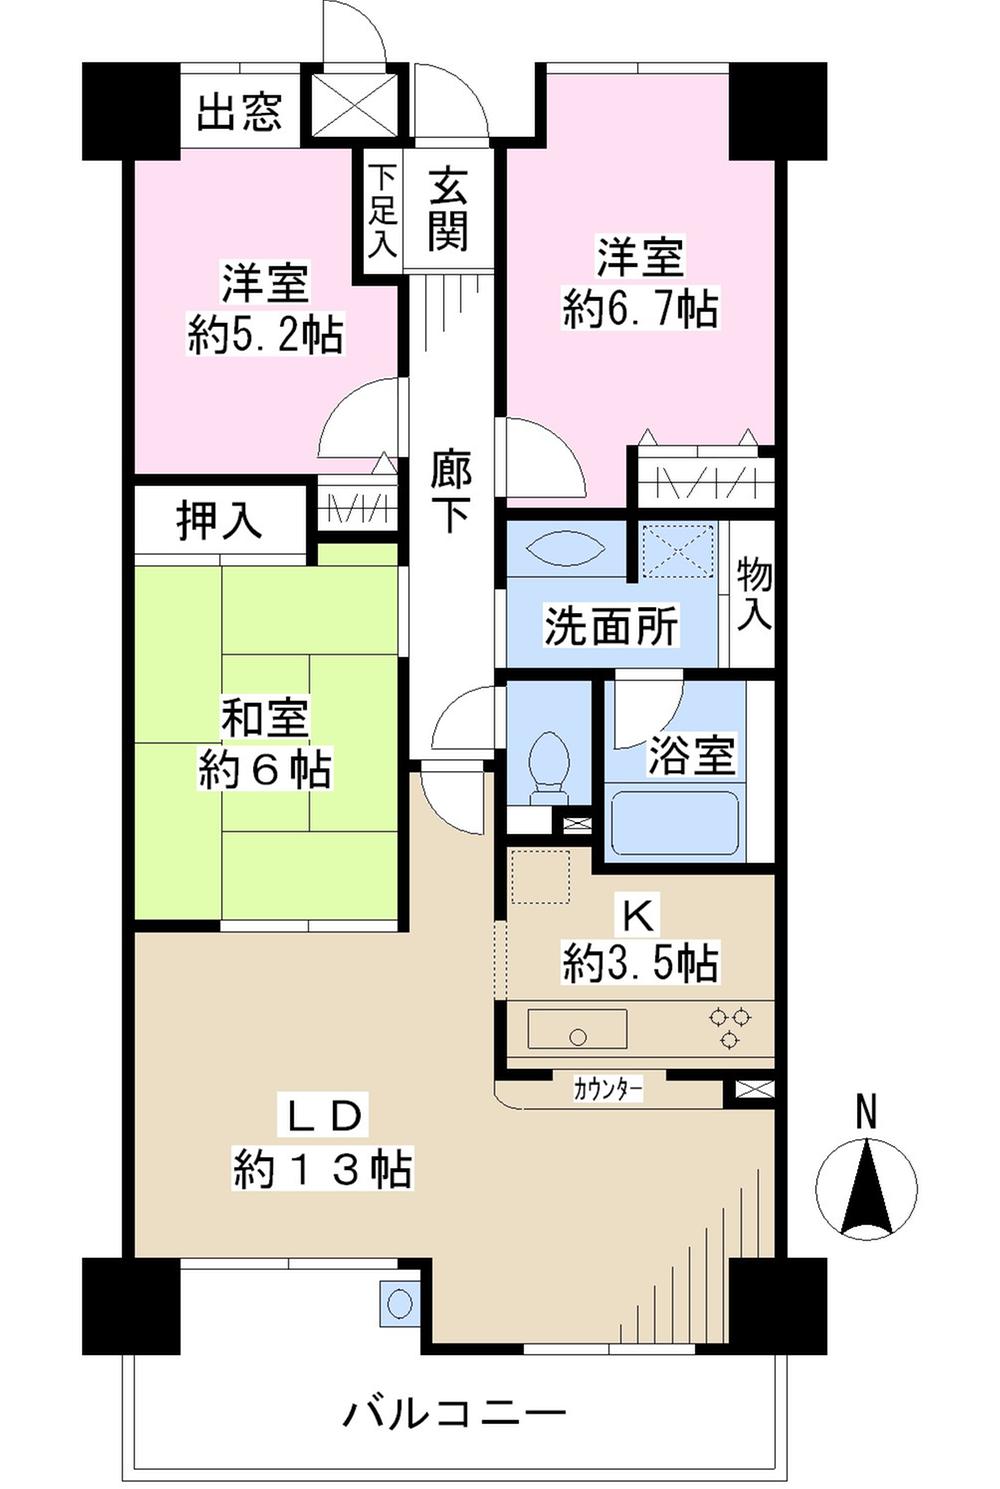 Floor plan. 3LDK, Price 33,800,000 yen, Footprint 75.8 sq m , Balcony area 10.84 sq m